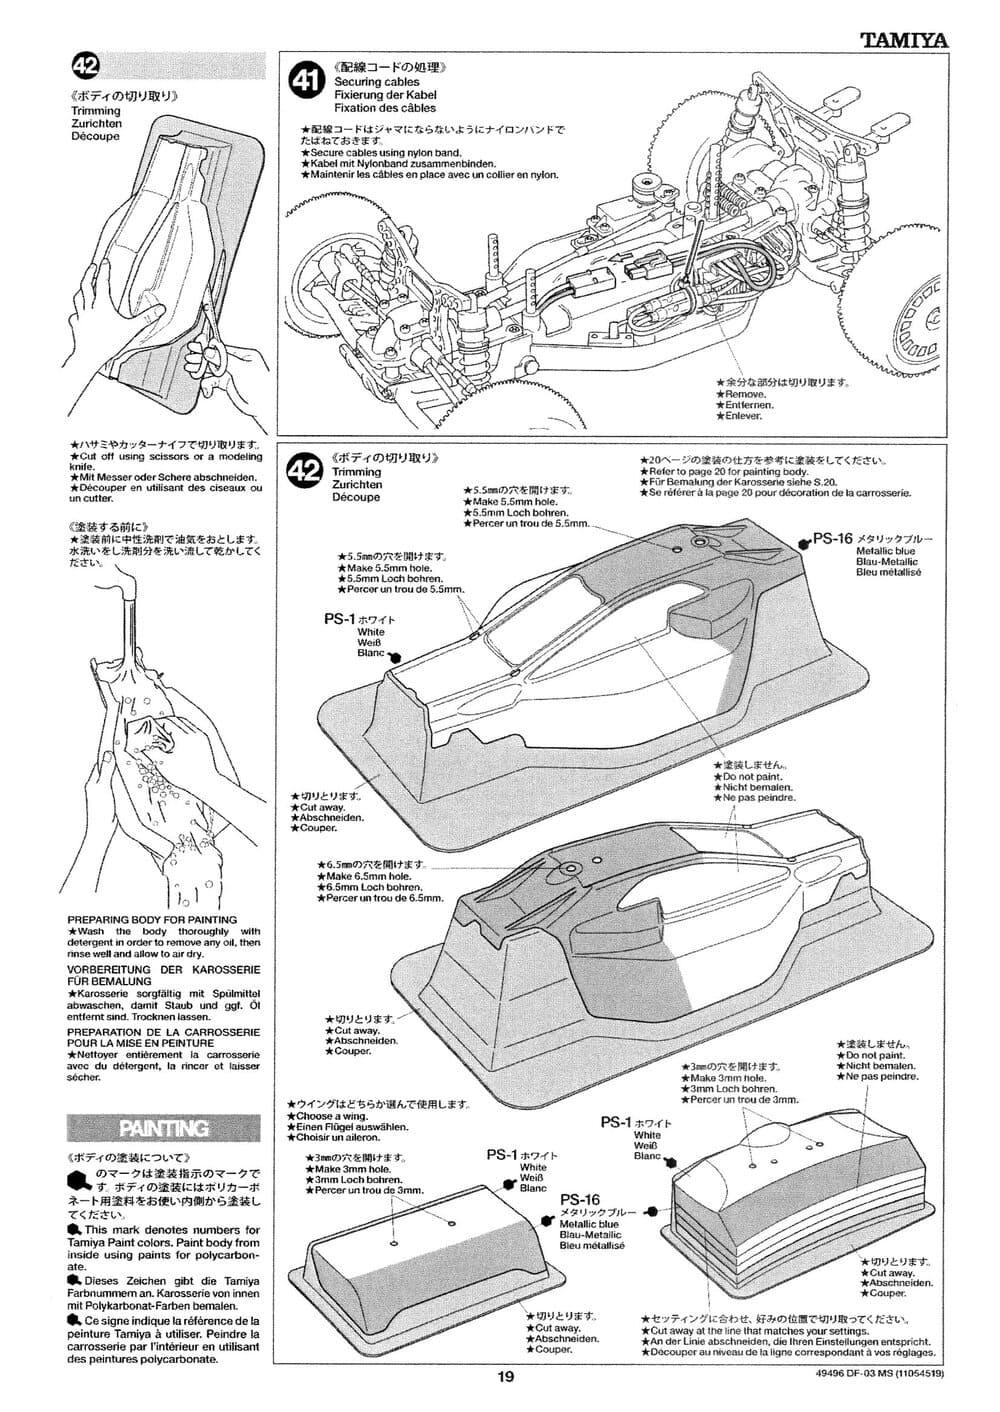 Tamiya - DF-03 MS Chassis Chassis - Manual - Page 19